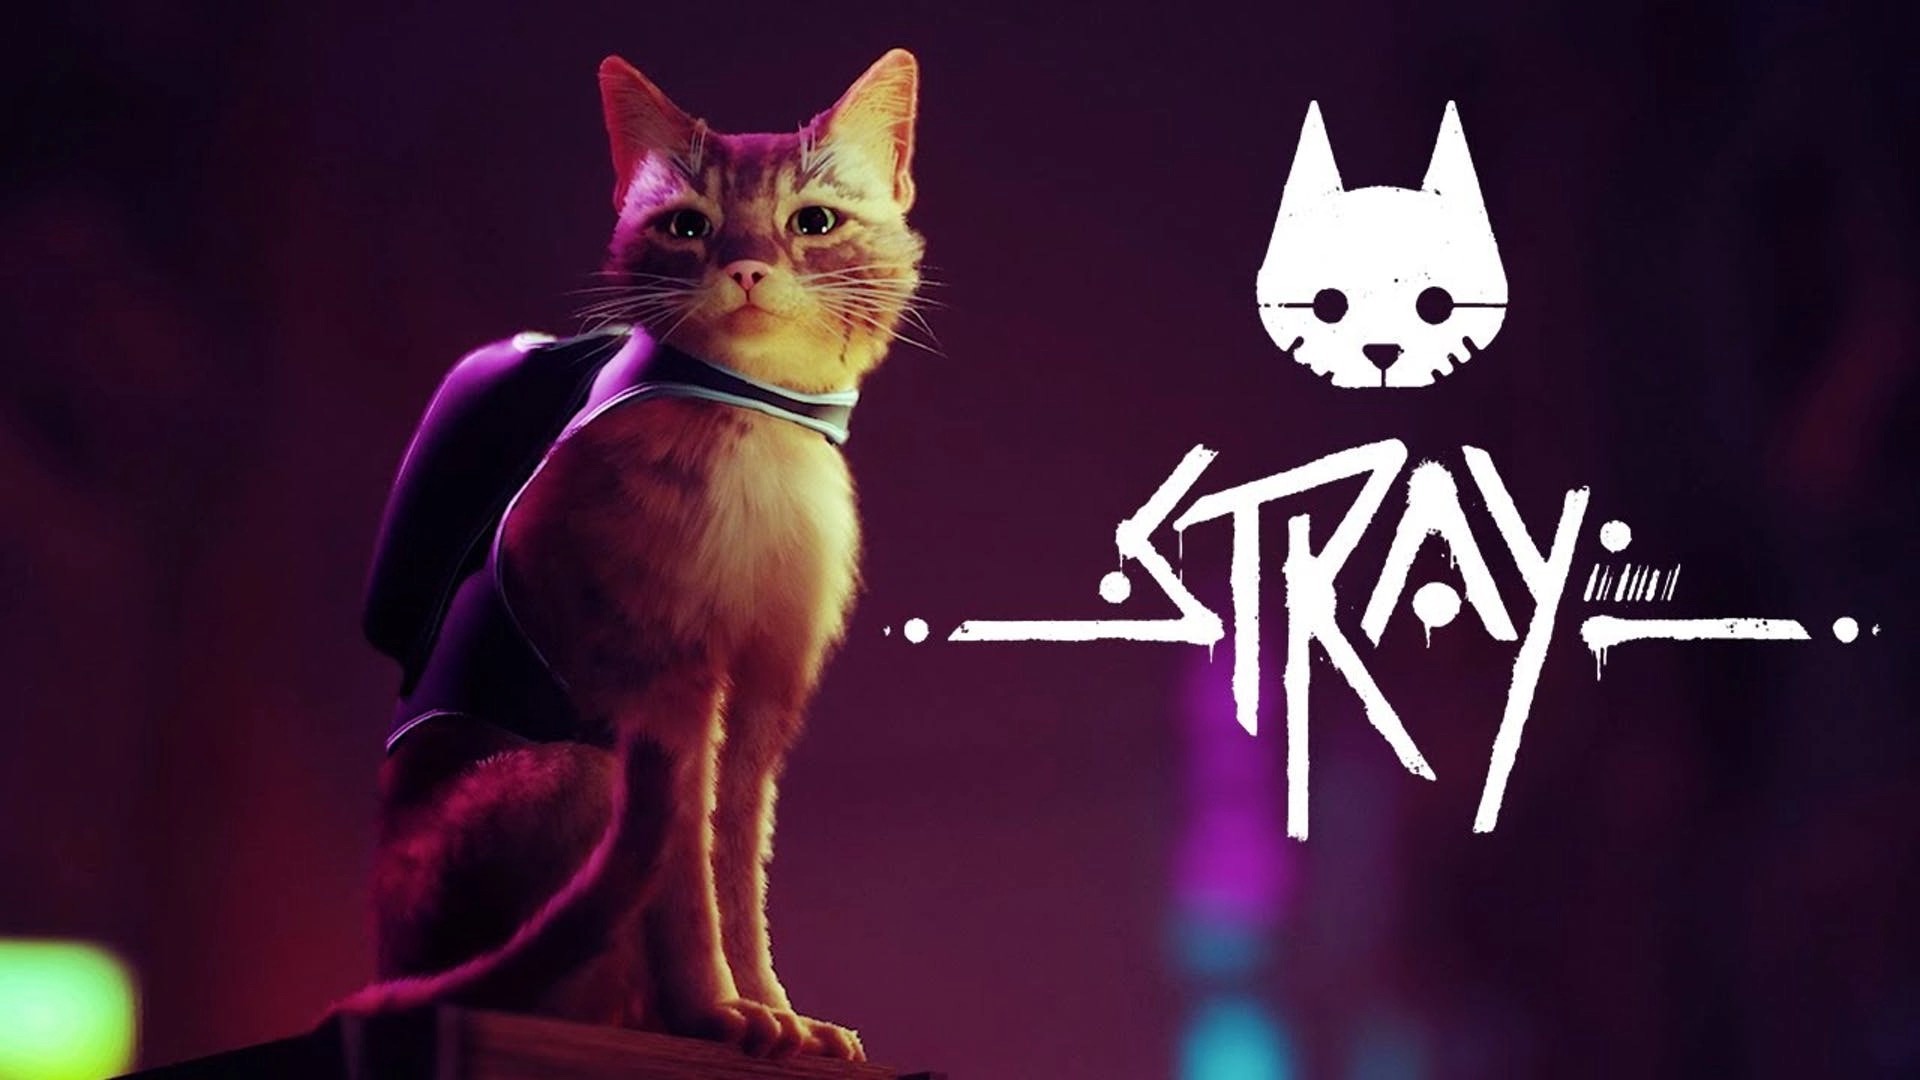 Официально: STRAY выходит на приставках Xbox уже в августе: с сайта NEWXBOXONE.RU